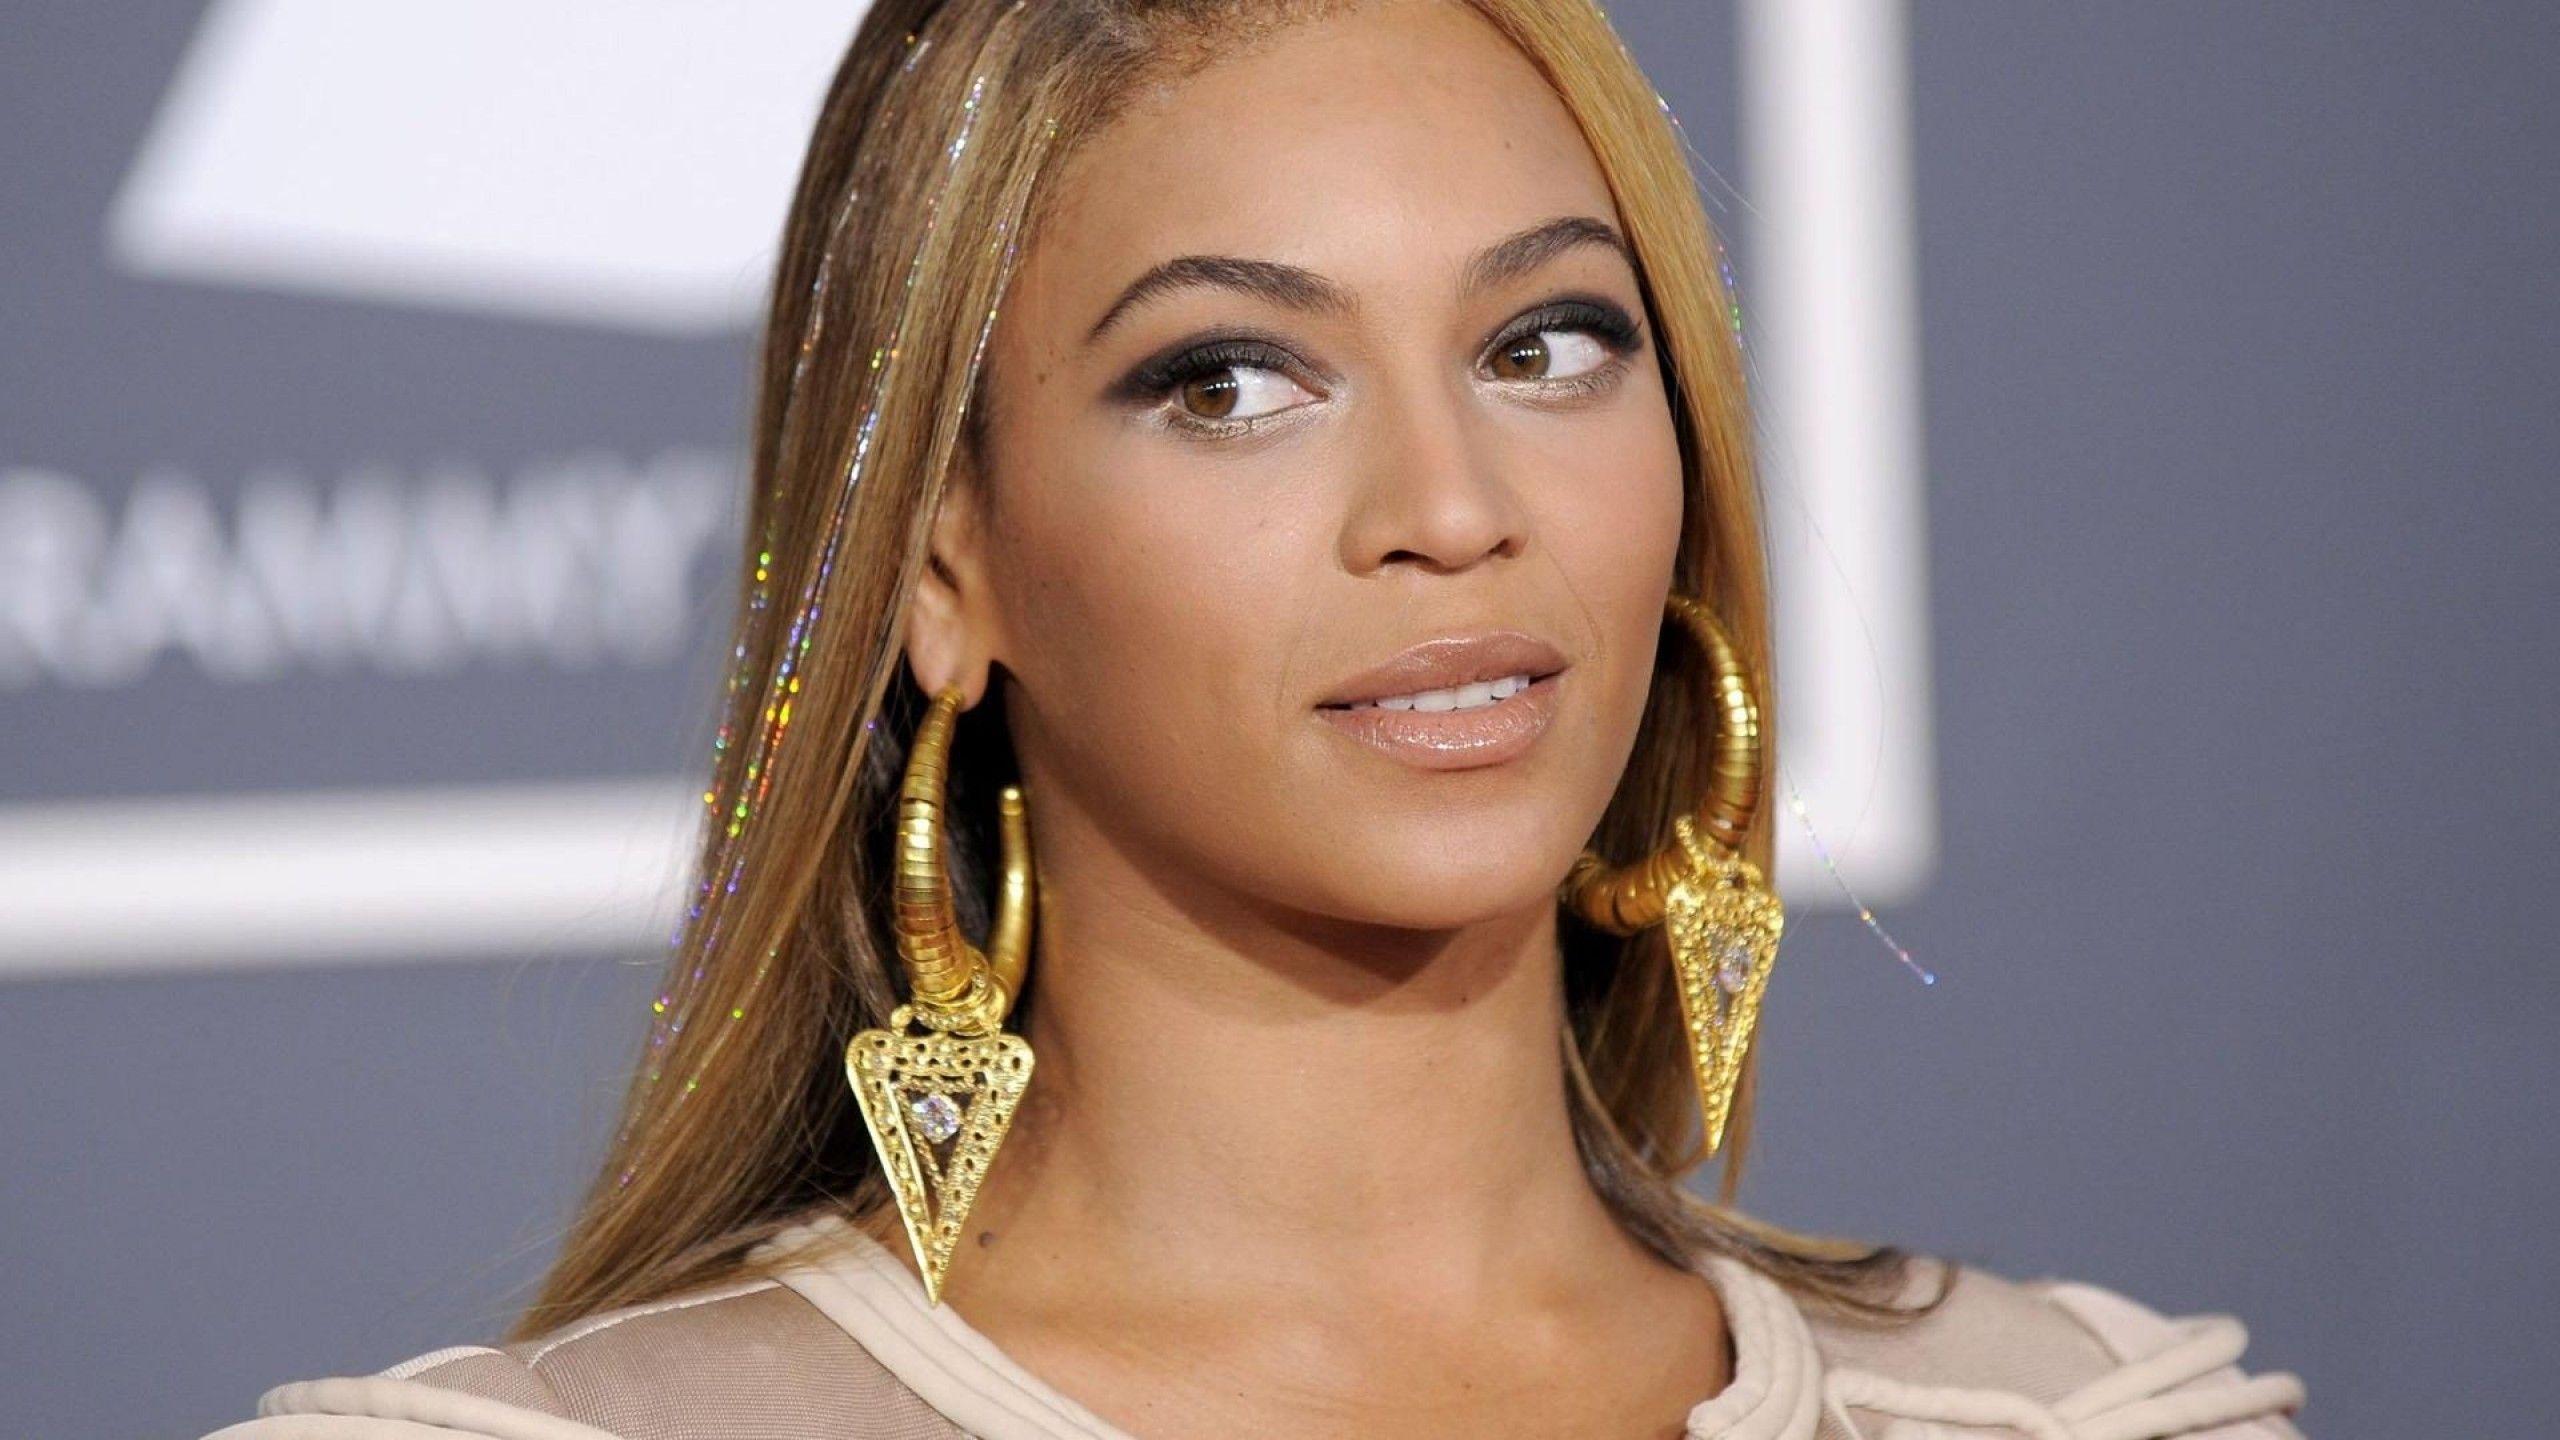 Most Famous American Female Singer Beyonce HD Wallpaper. HD